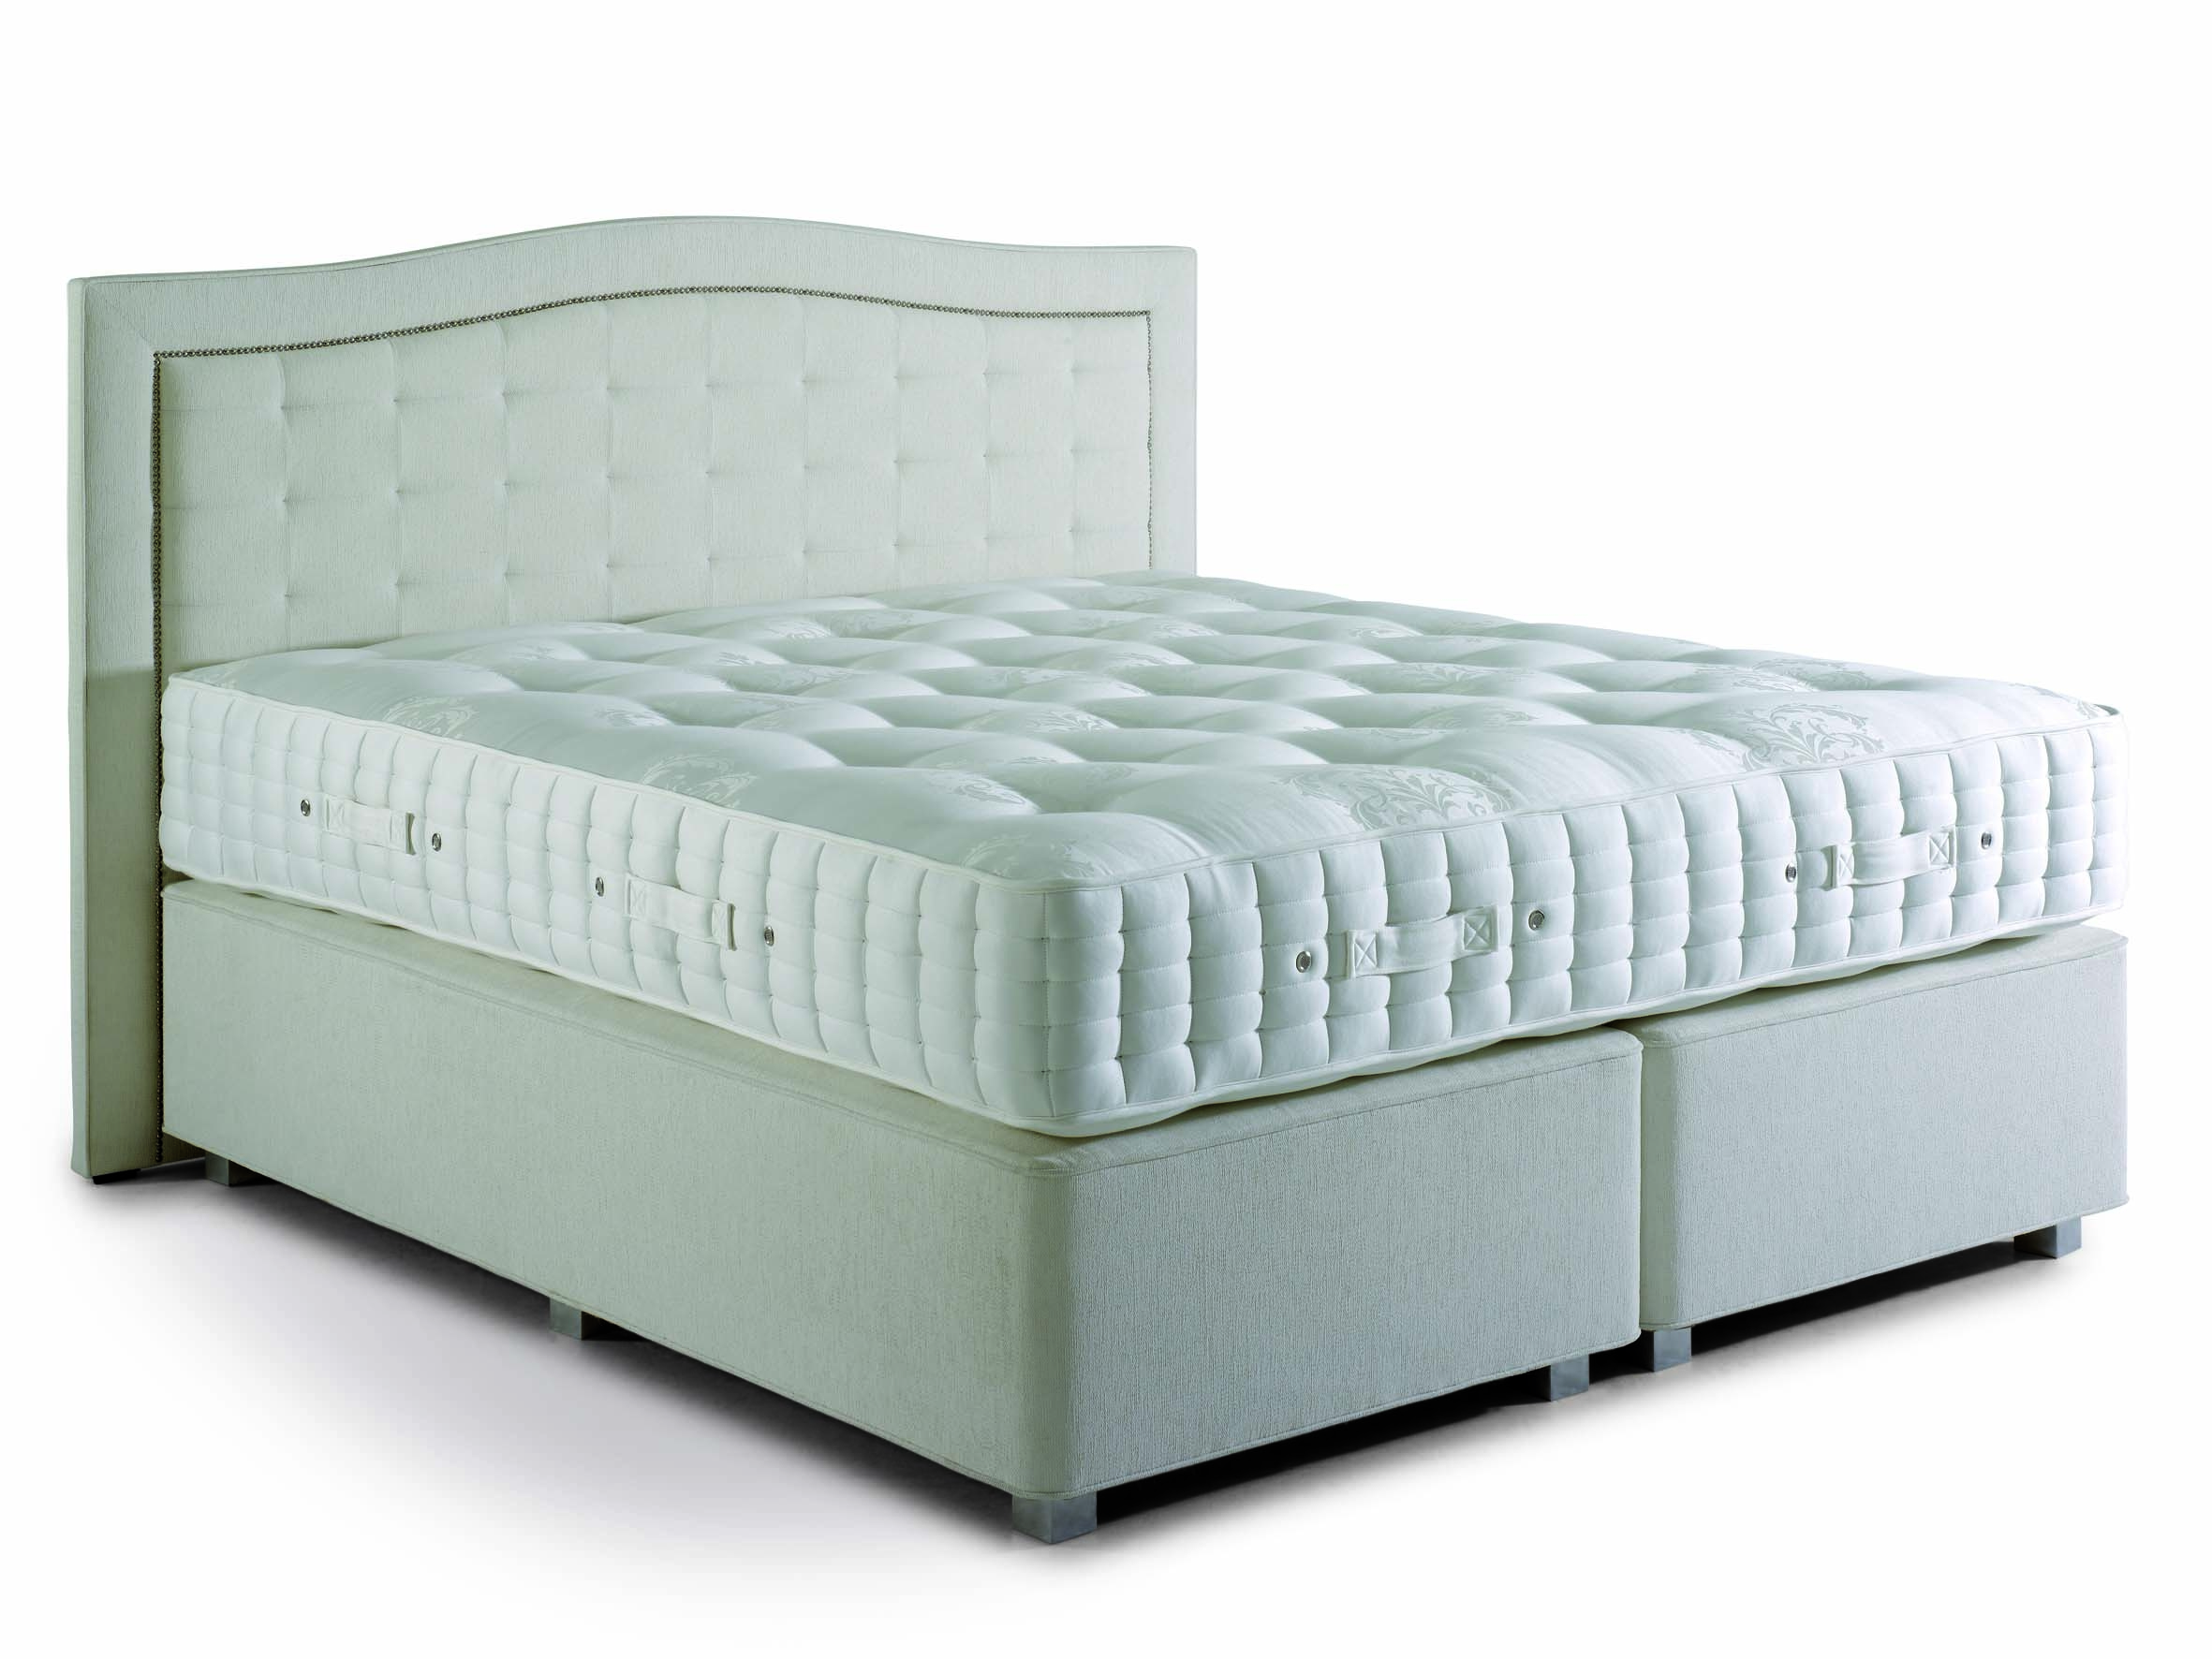 Hypnos orthos latex 10 turn pocket mattress this mattress is